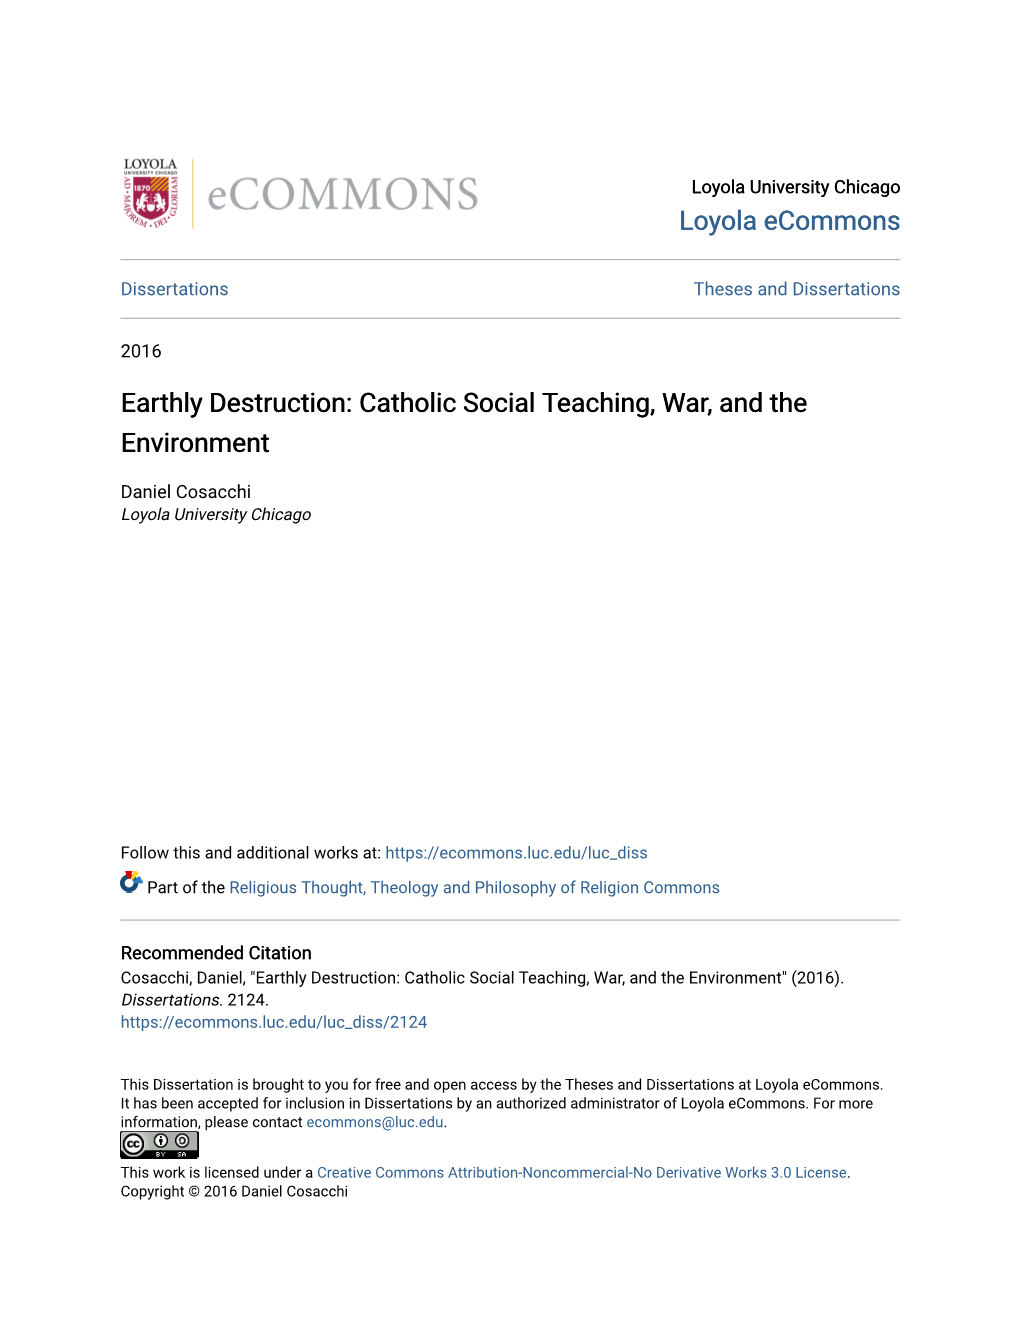 Catholic Social Teaching, War, and the Environment